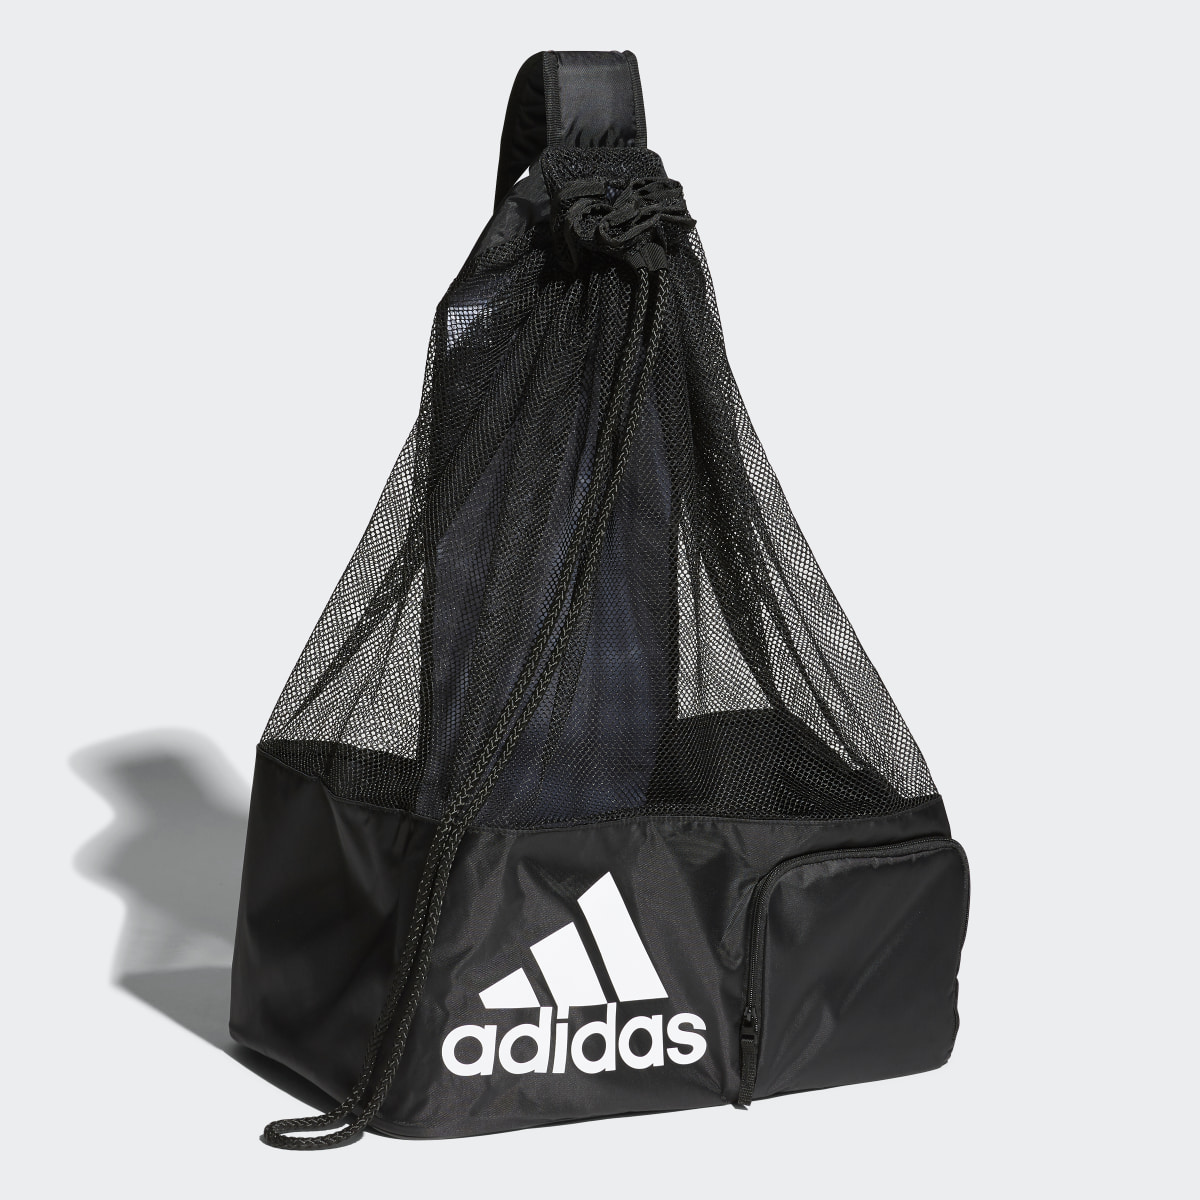 Adidas Stadium Ball Bag. 4